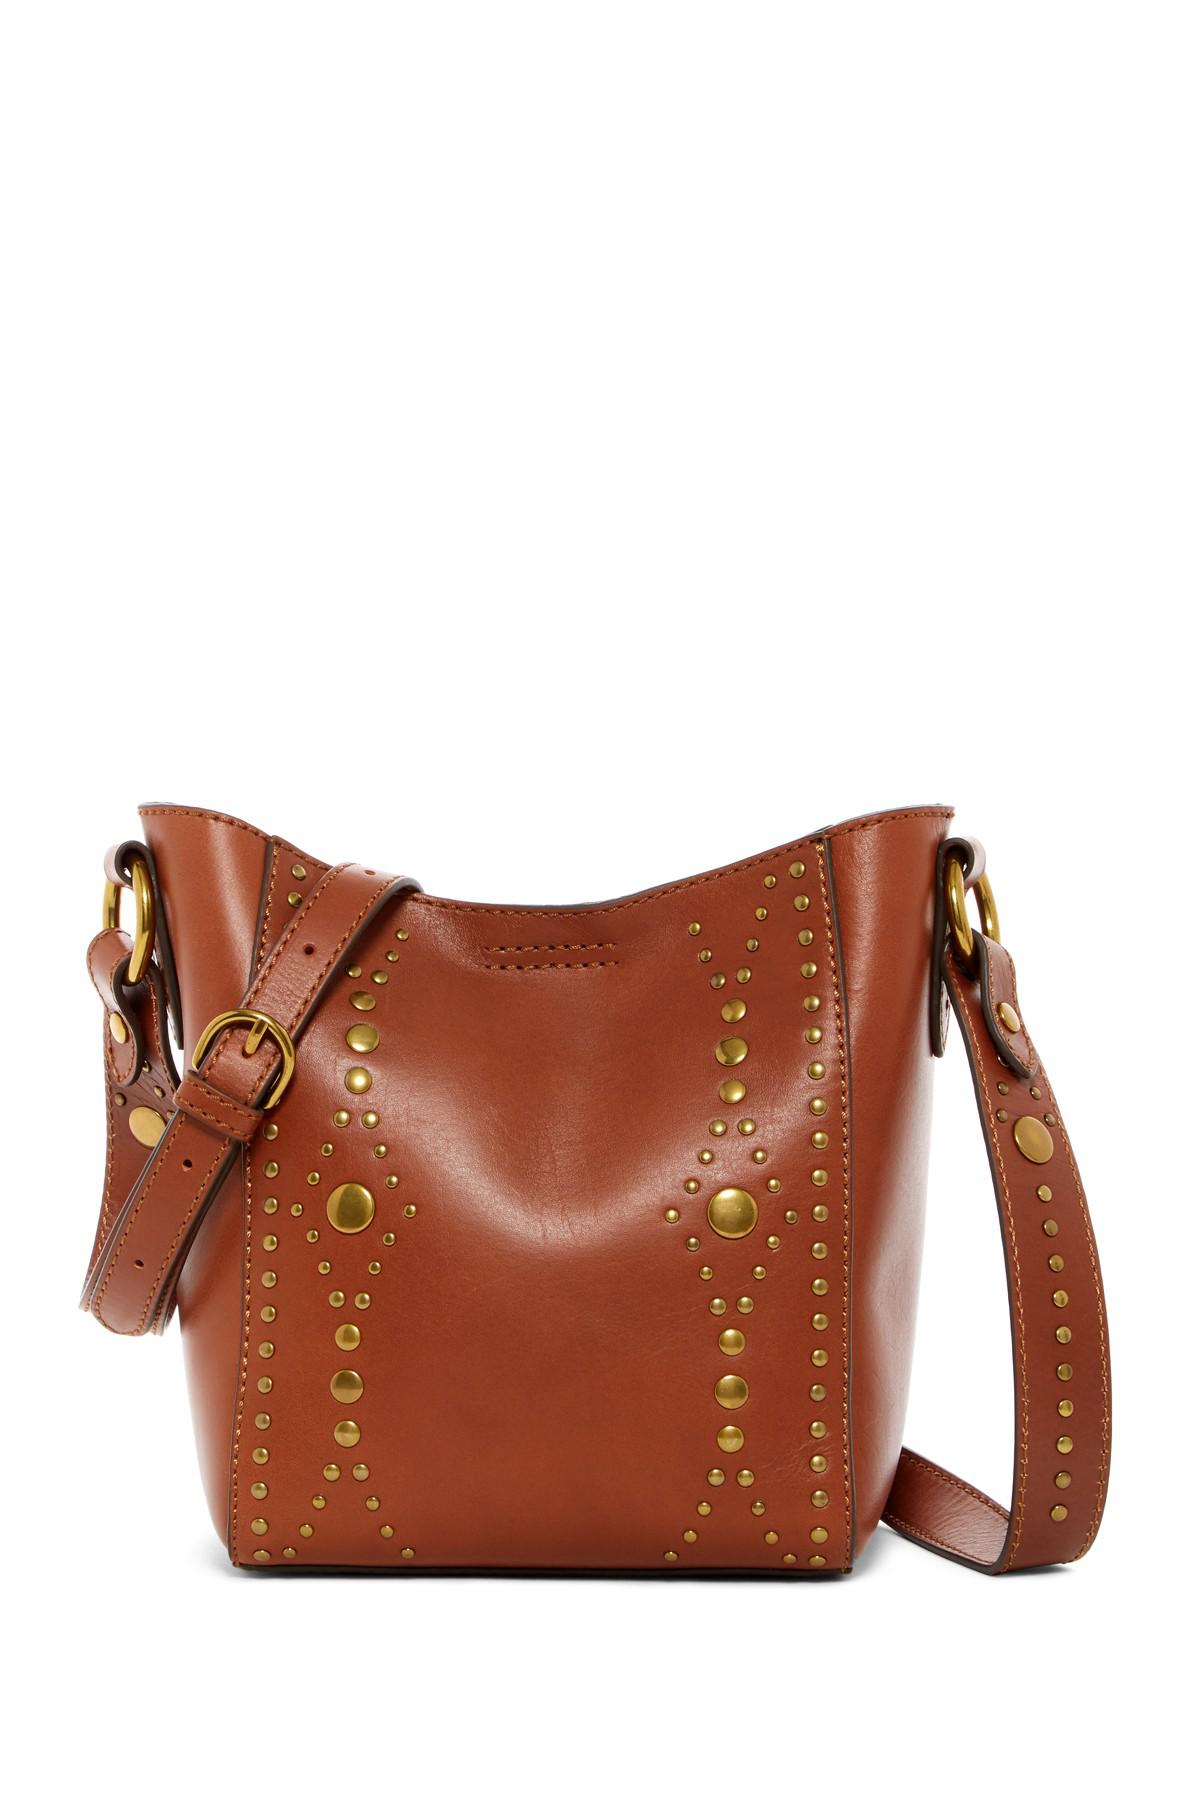 Frye Harness Stud Leather Crossbody Bag in Rust (Brown) - Lyst